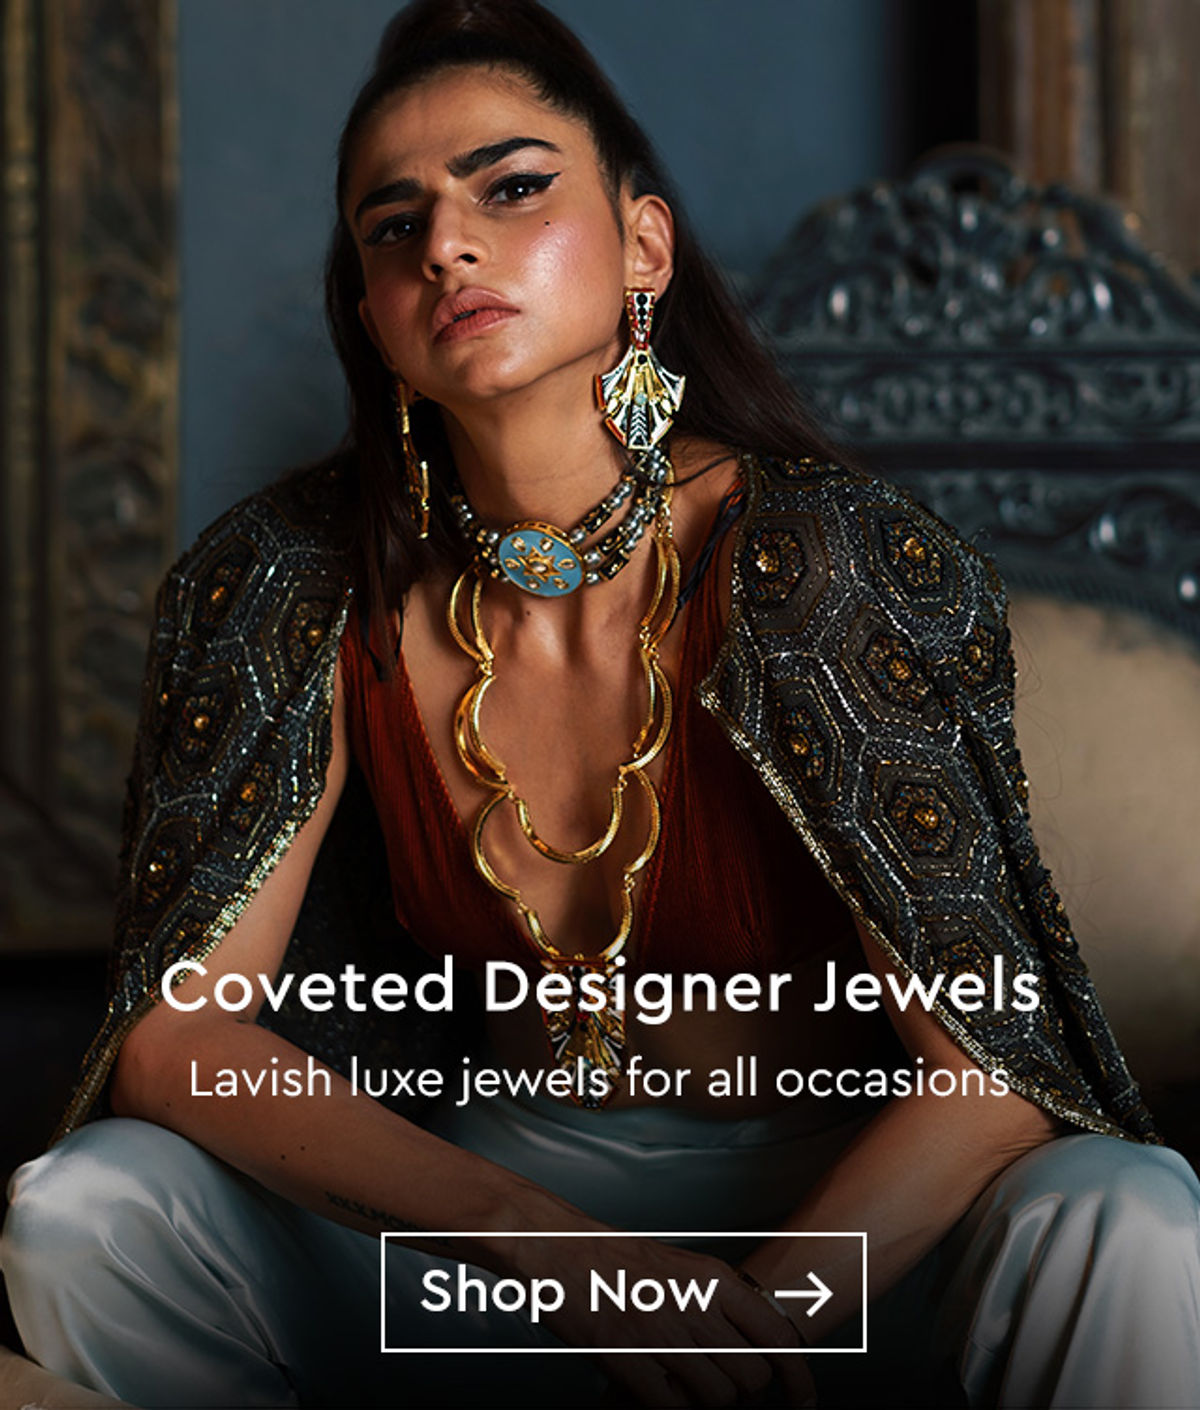 coveted-designer-jewels